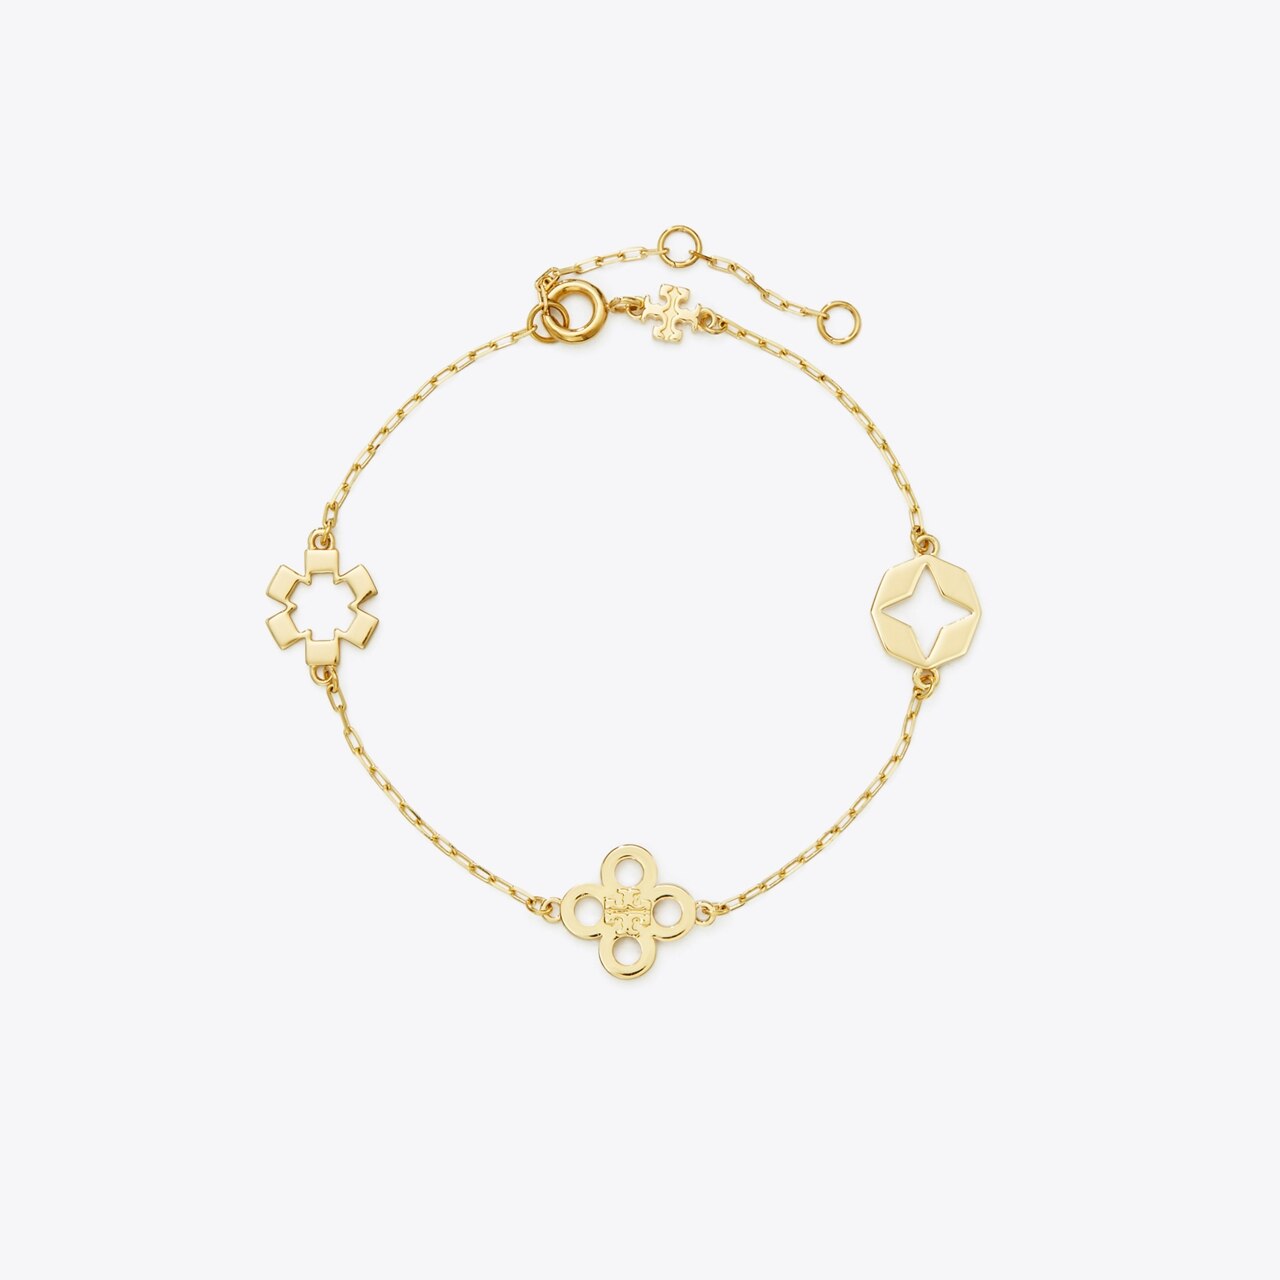 Kira Clover Bracelet: Women's Jewelry, Bracelets